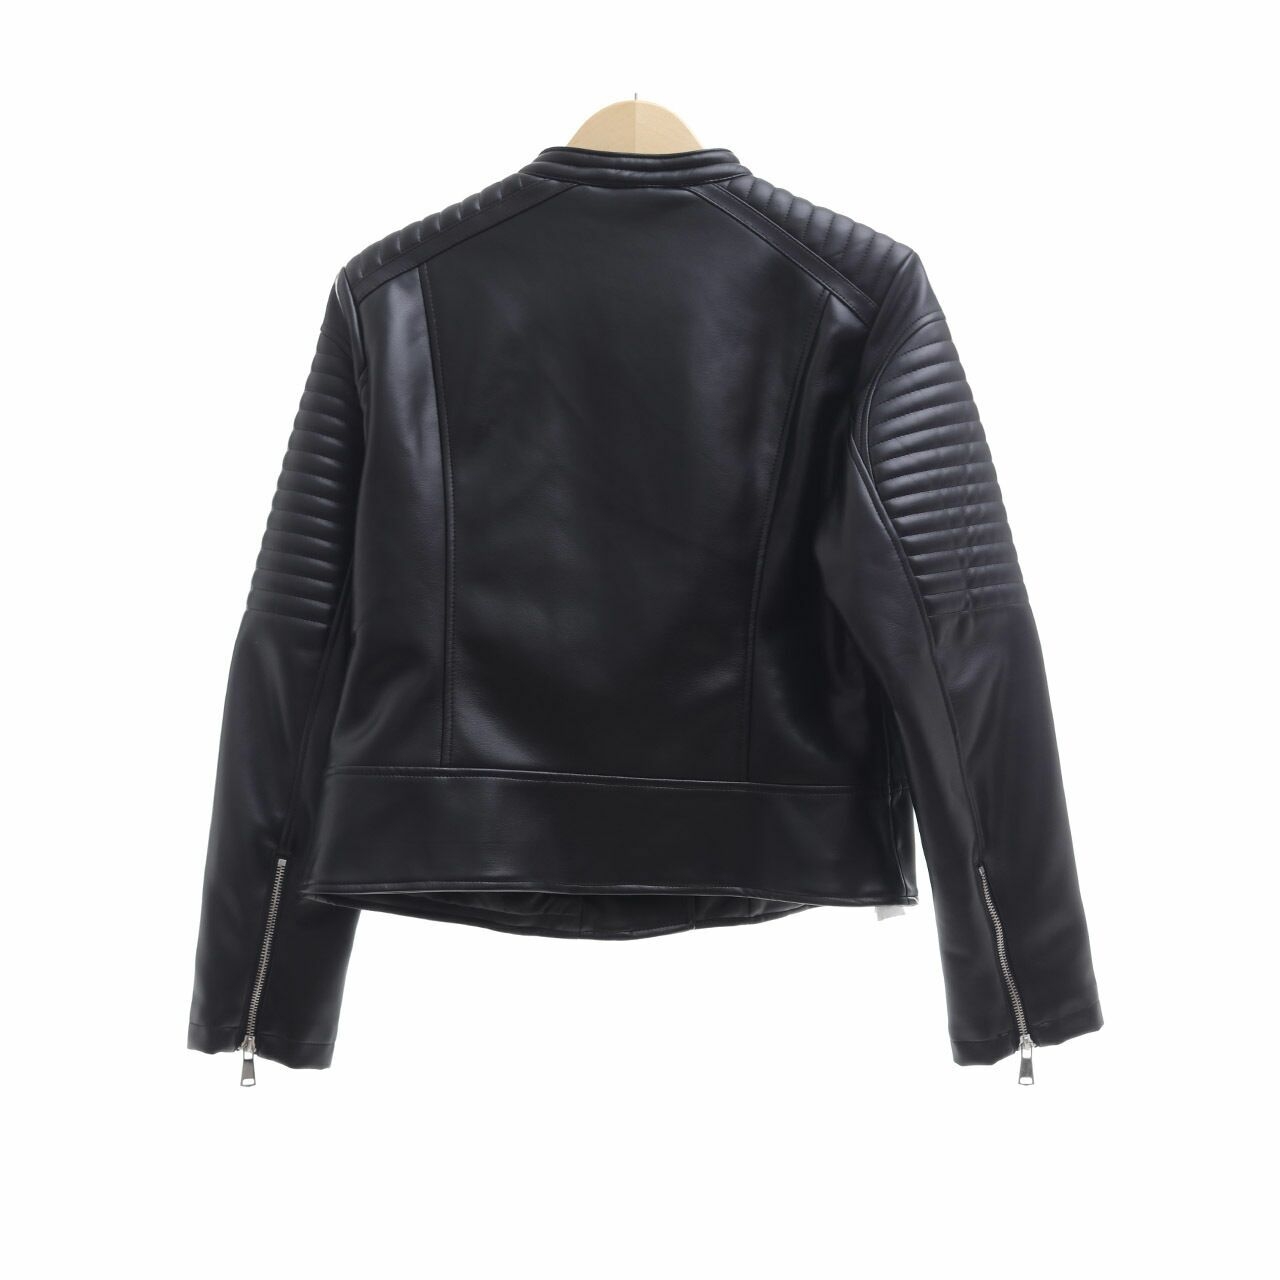 Zara Black Jacket